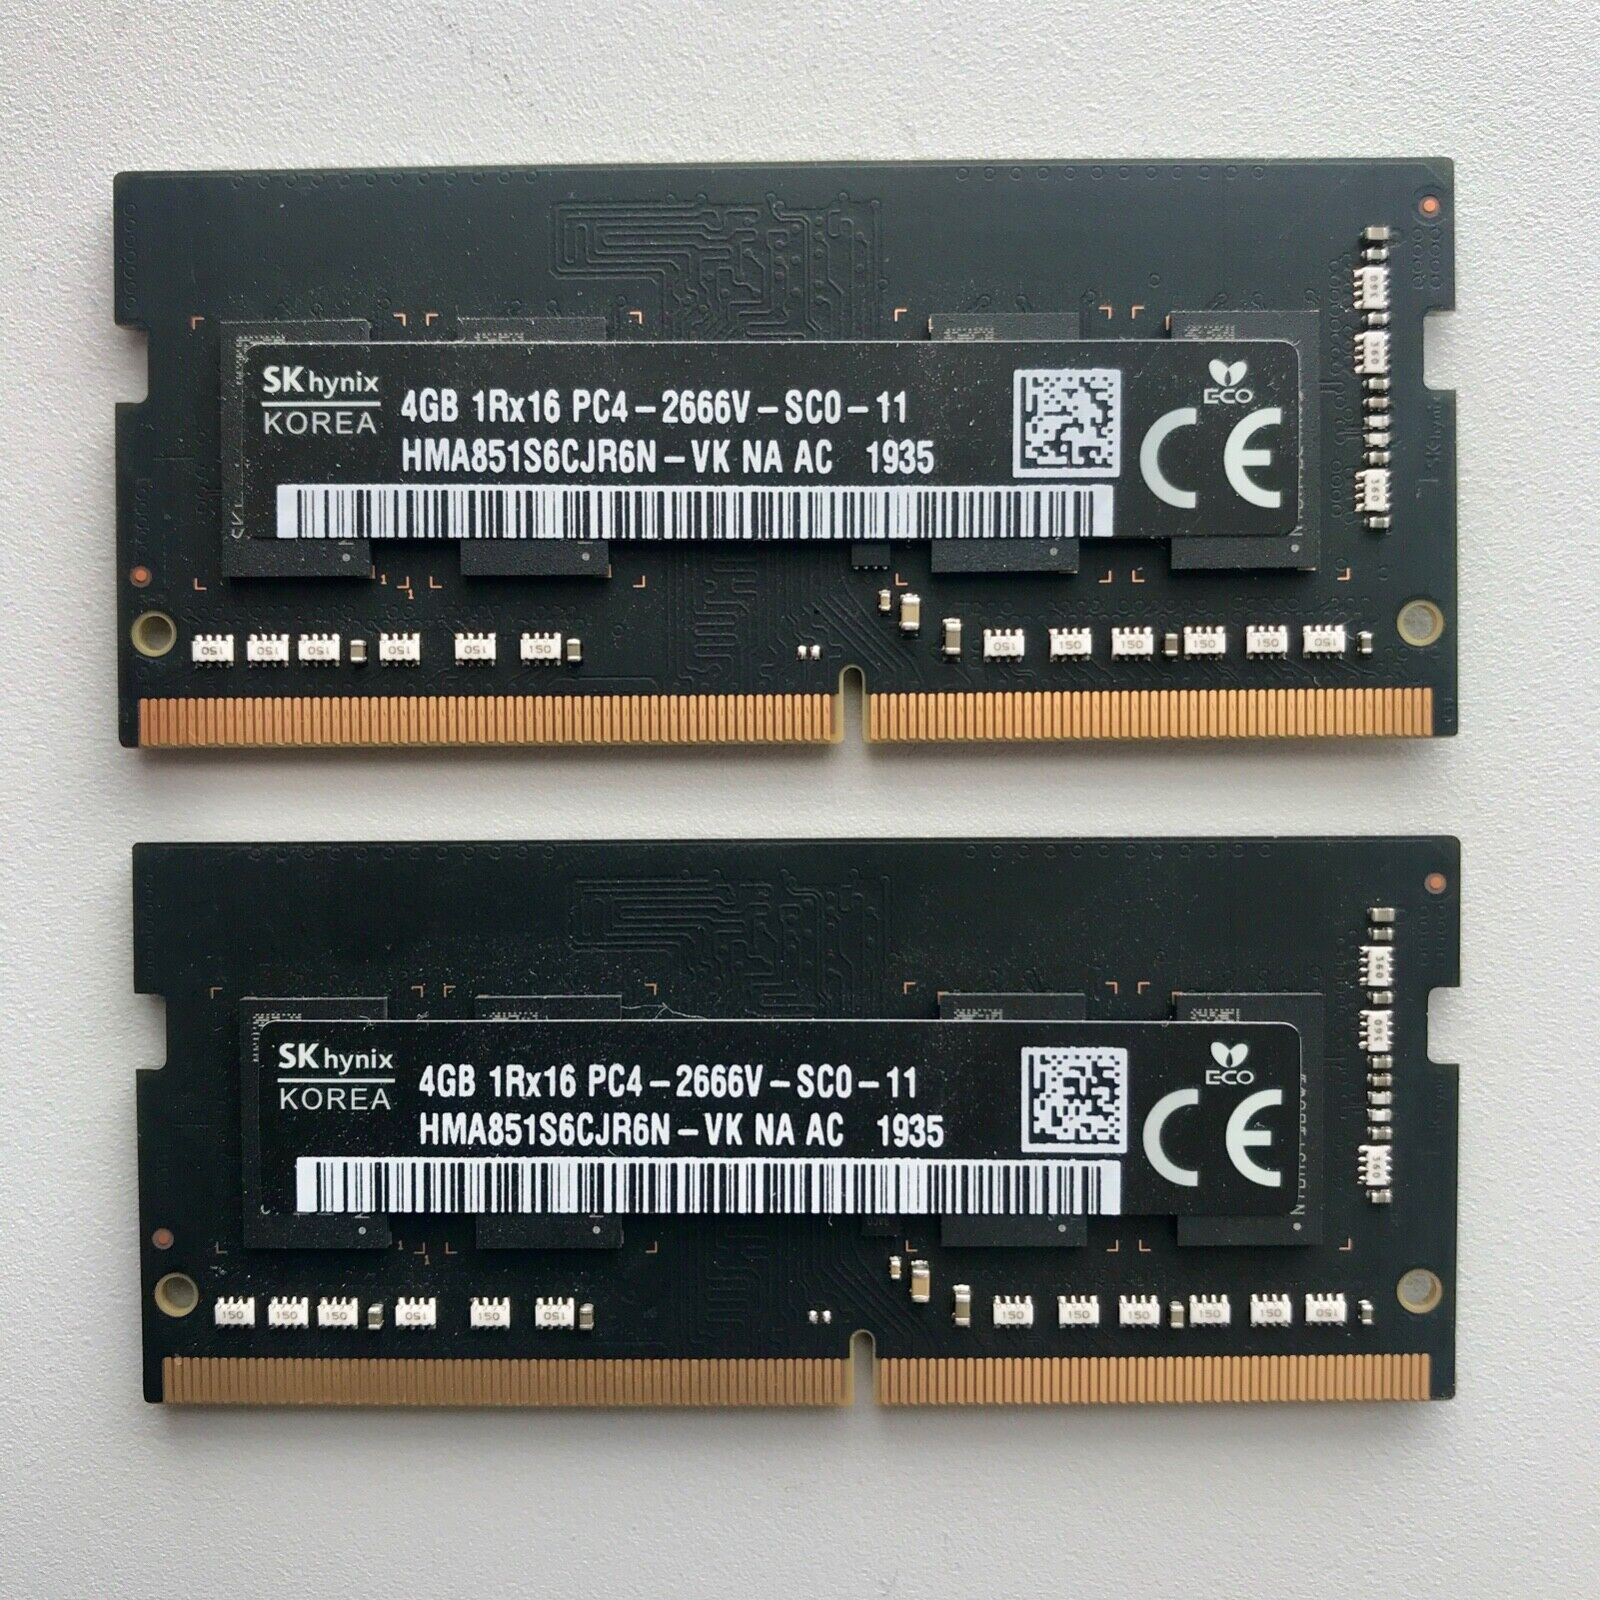 SK hynix 8GB Ram Memory (2x4GB) 1Rx16 PC4-2666V-SCO-11 from Apple Mac 5k 2019